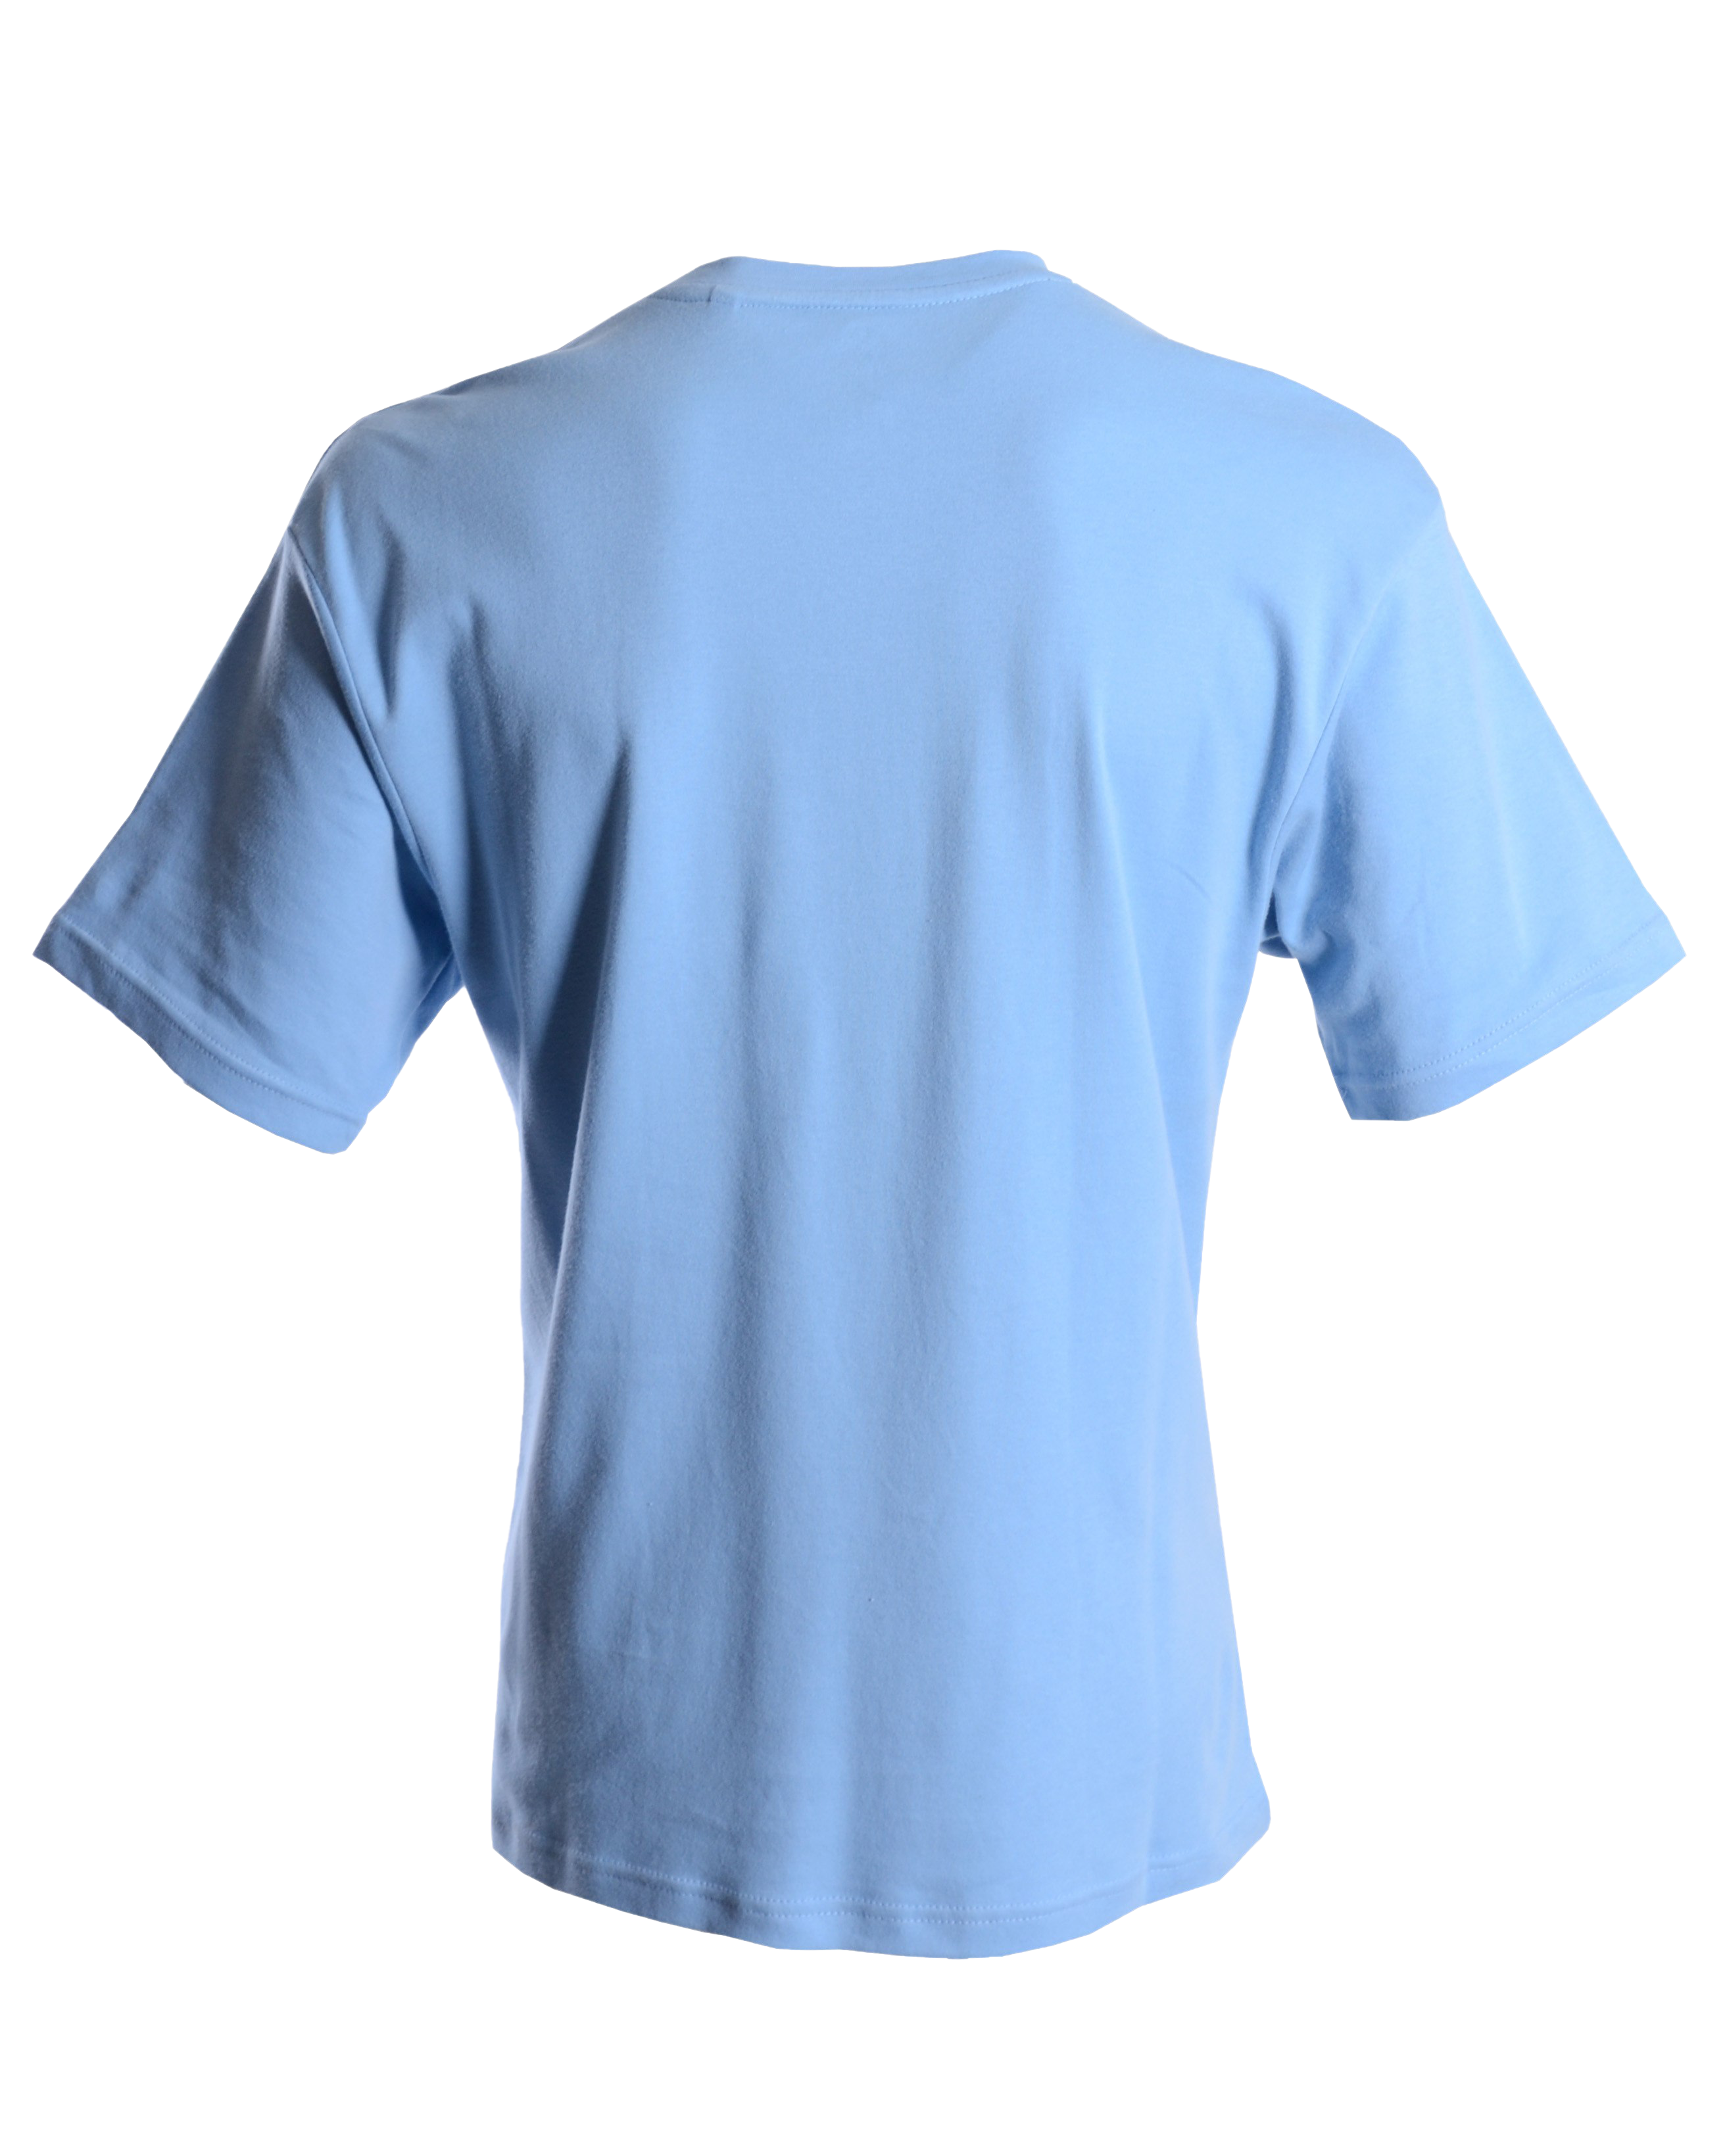 Plain Blue T-Shirt PNG High-Quality Image